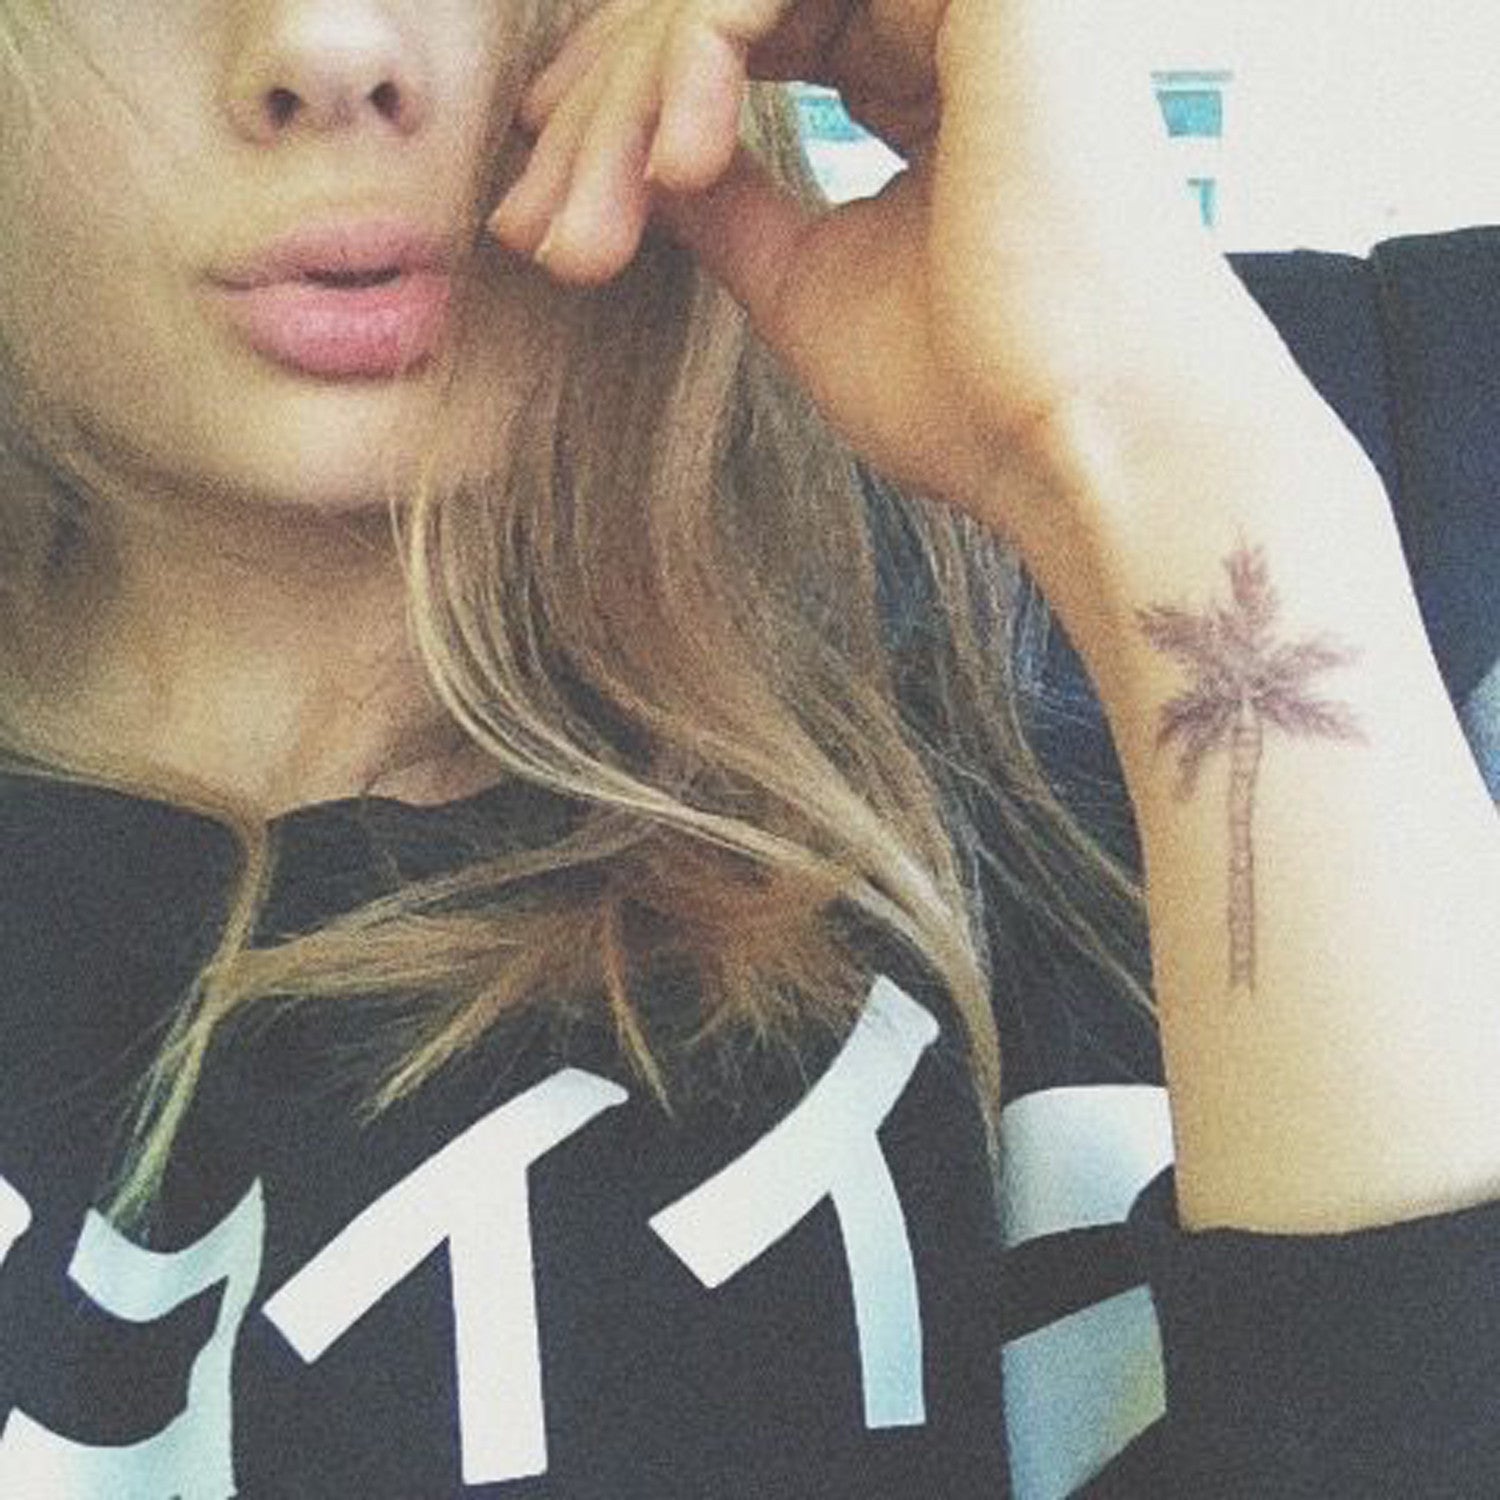 Wrist Tattoos for Women - Small Simple Palm Tree  Ladies Tats - MyBodiArt.com